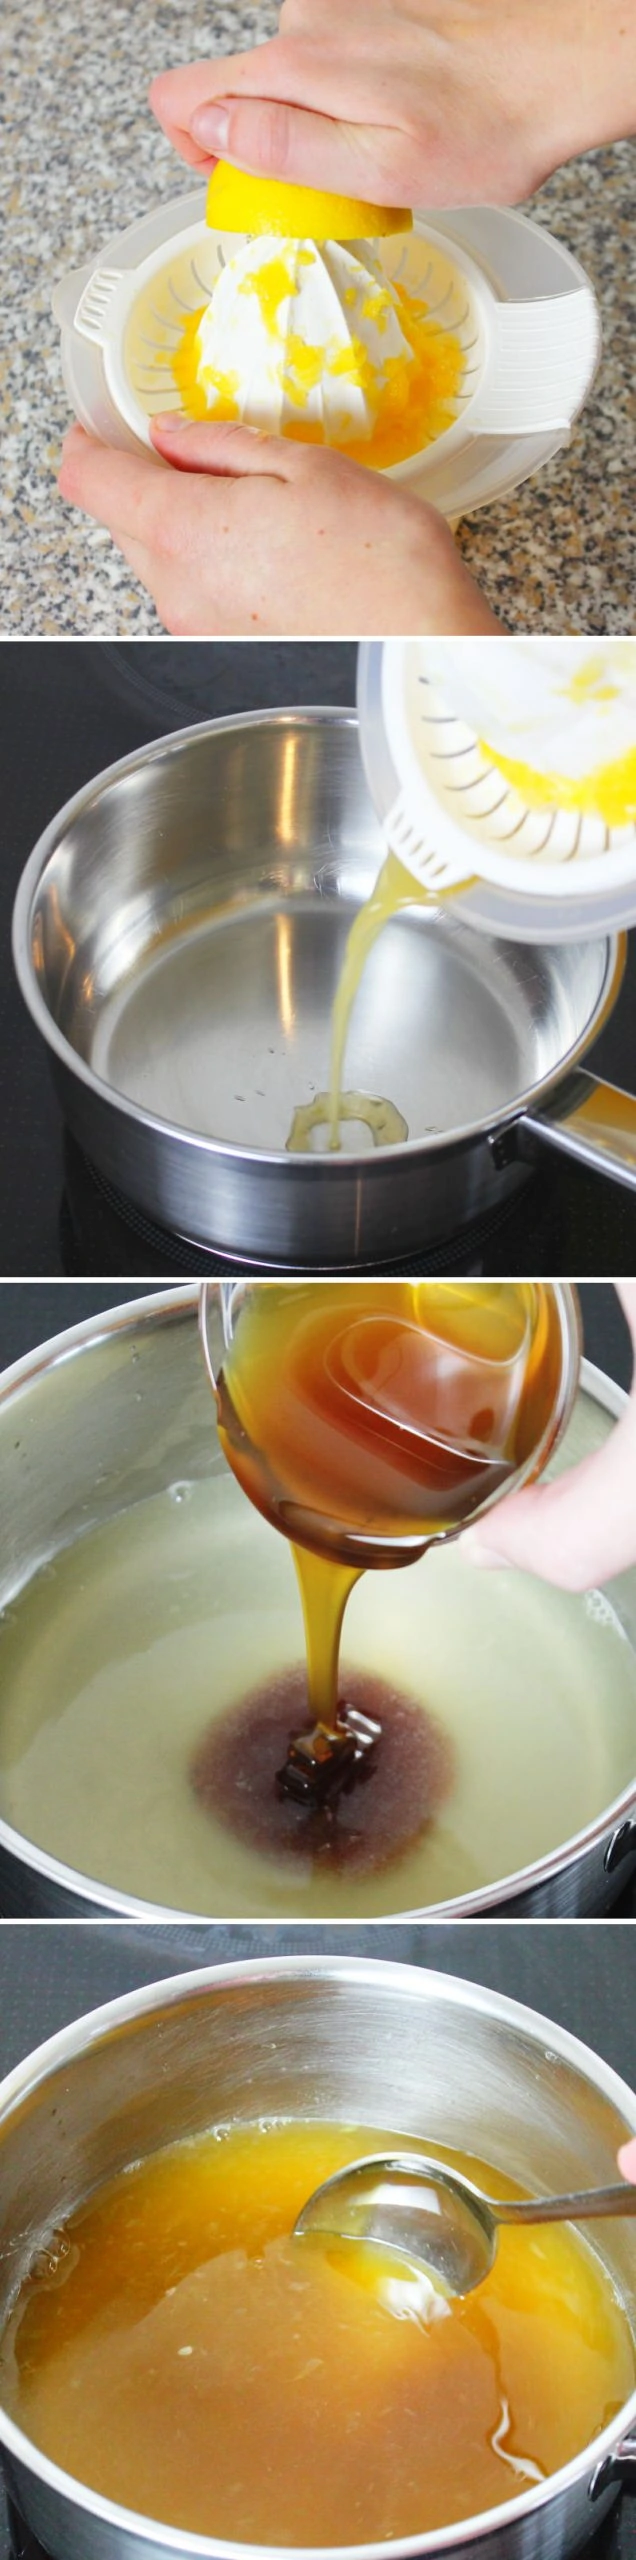 Dango mit Beerenfüllung Schritt 2 Honigsirup zubereiten